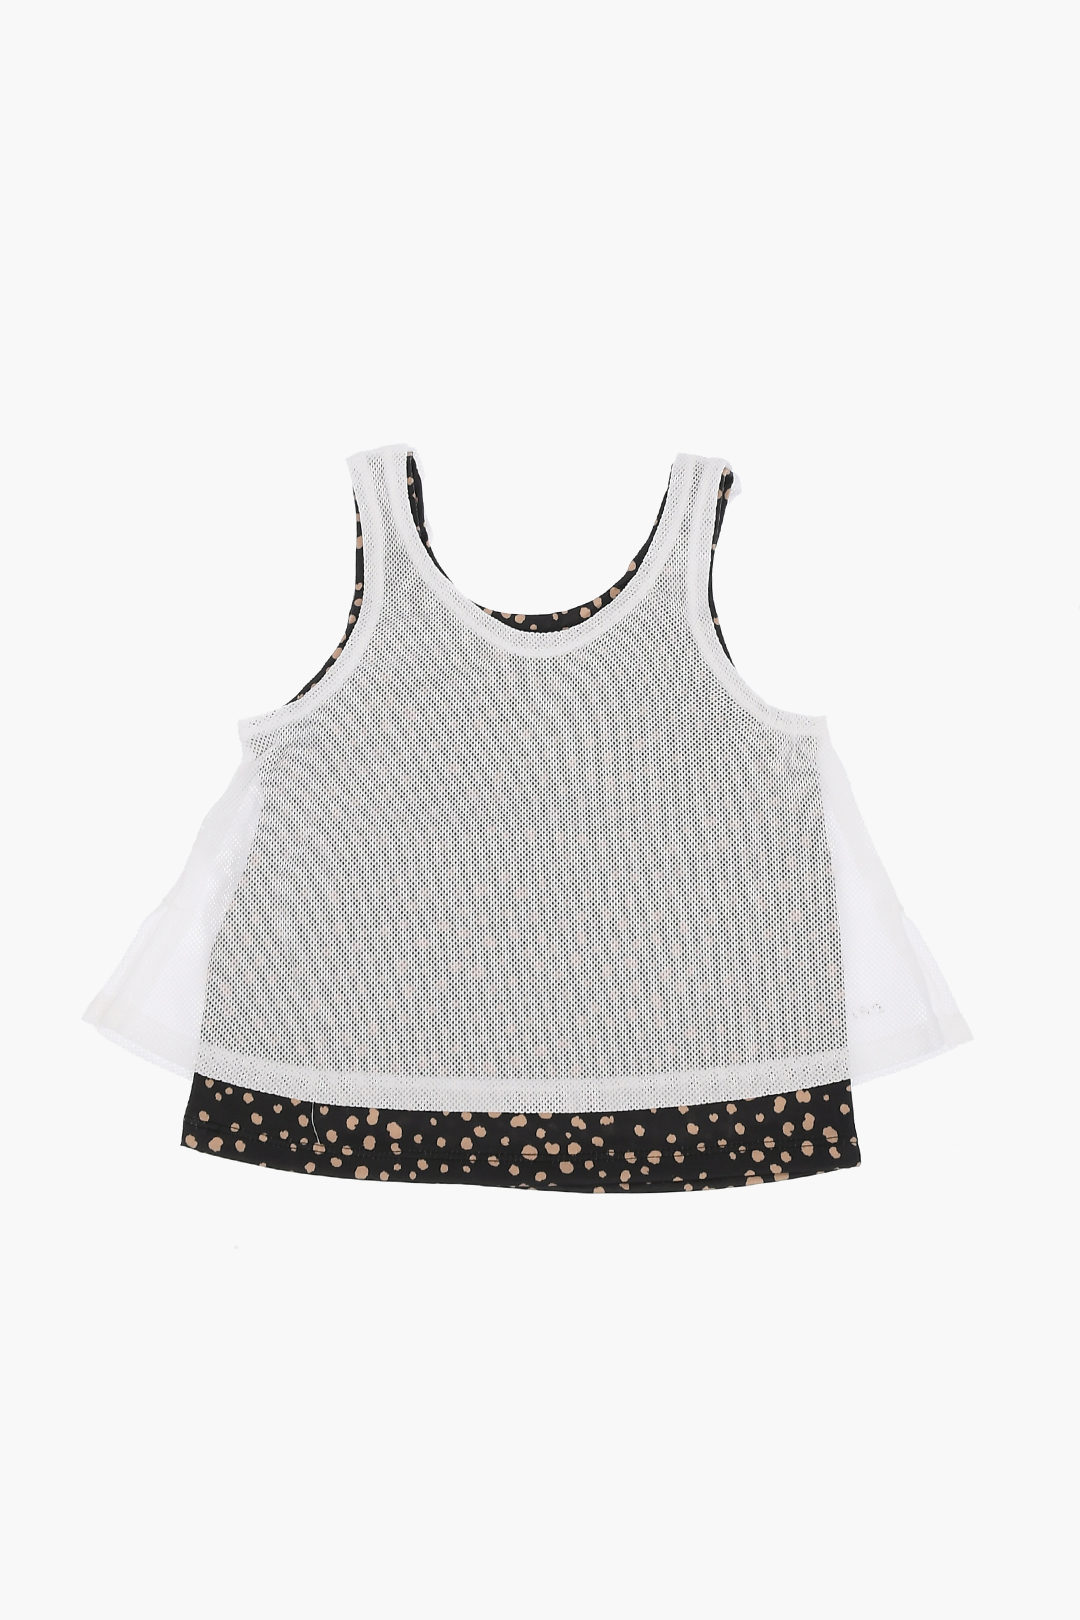 Nike KIDS Openwork Tank top with Polka Dots Inner girls - Glamood